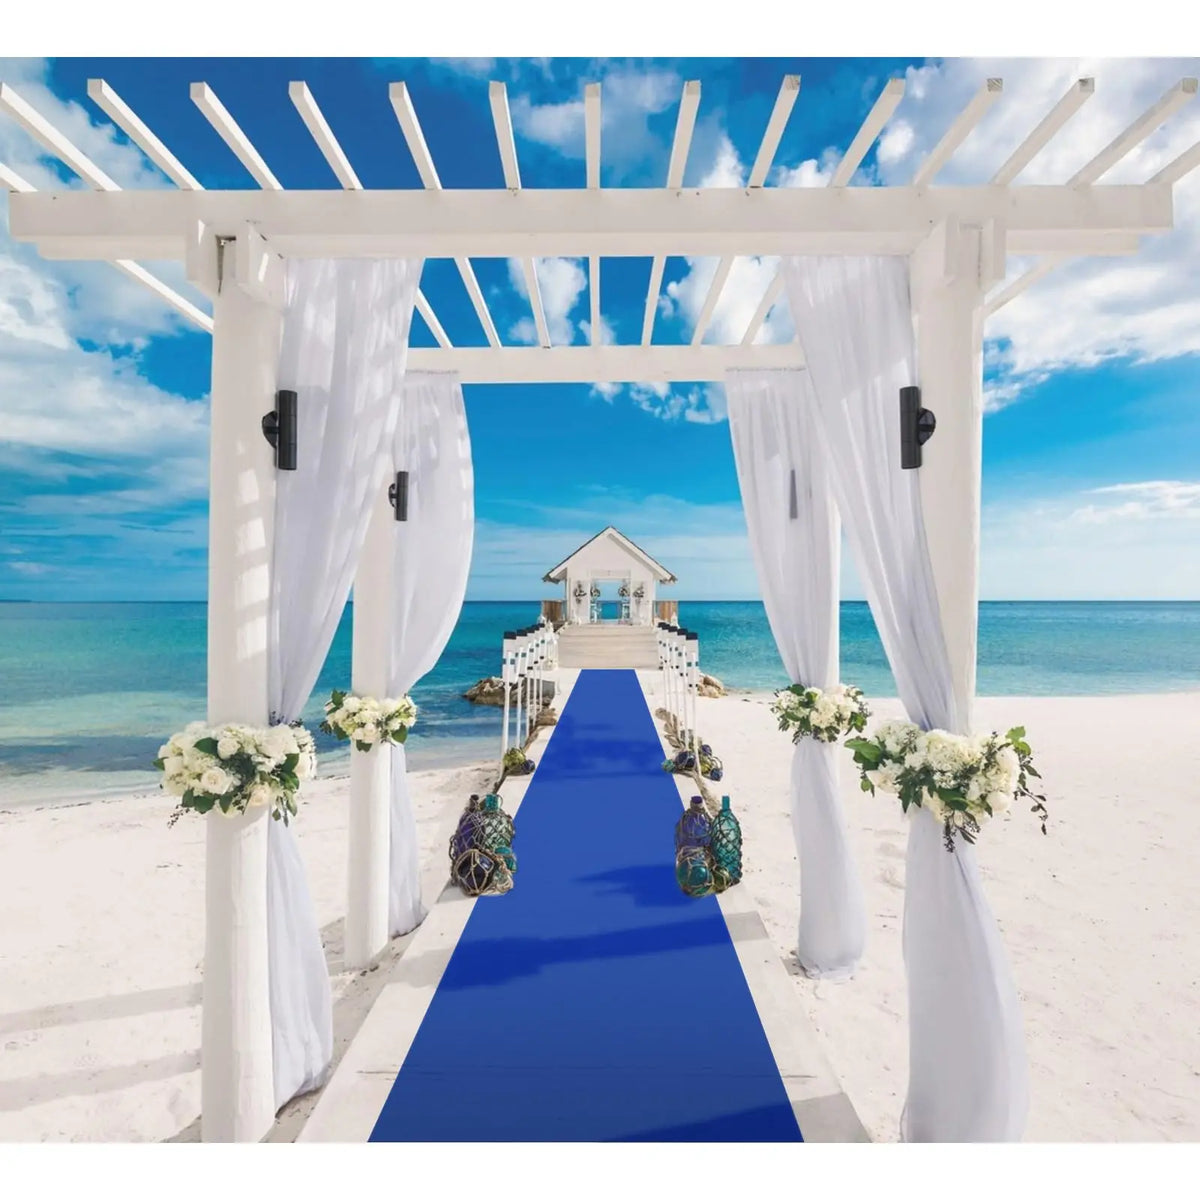 a blue and white wedding aisle on the beach